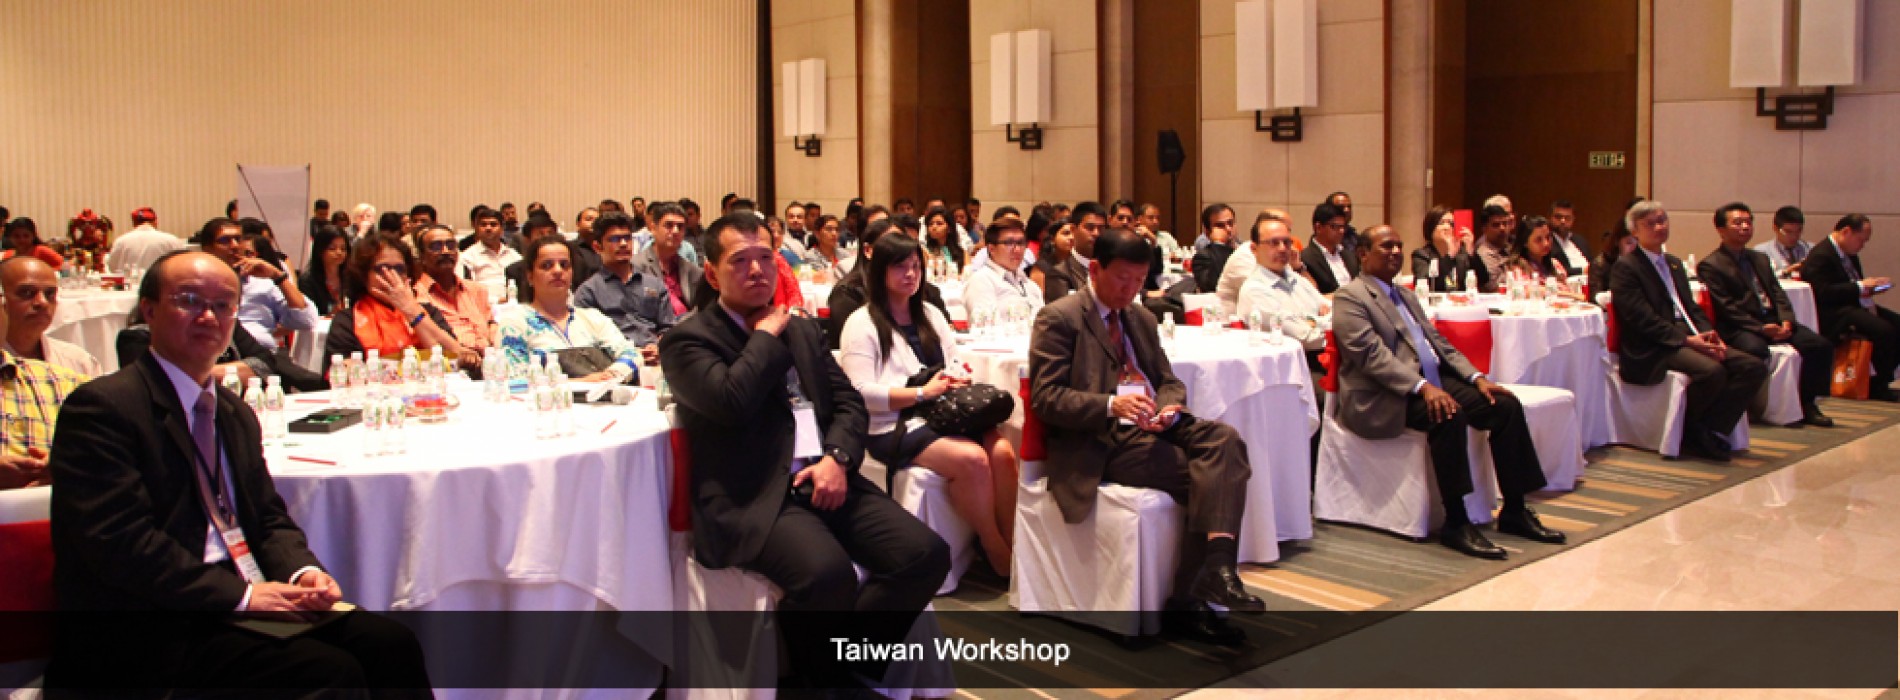 Taiwan Tourism Bureau participates in OTM 2017 and holds Workshops in Mumbai and Bengaluru